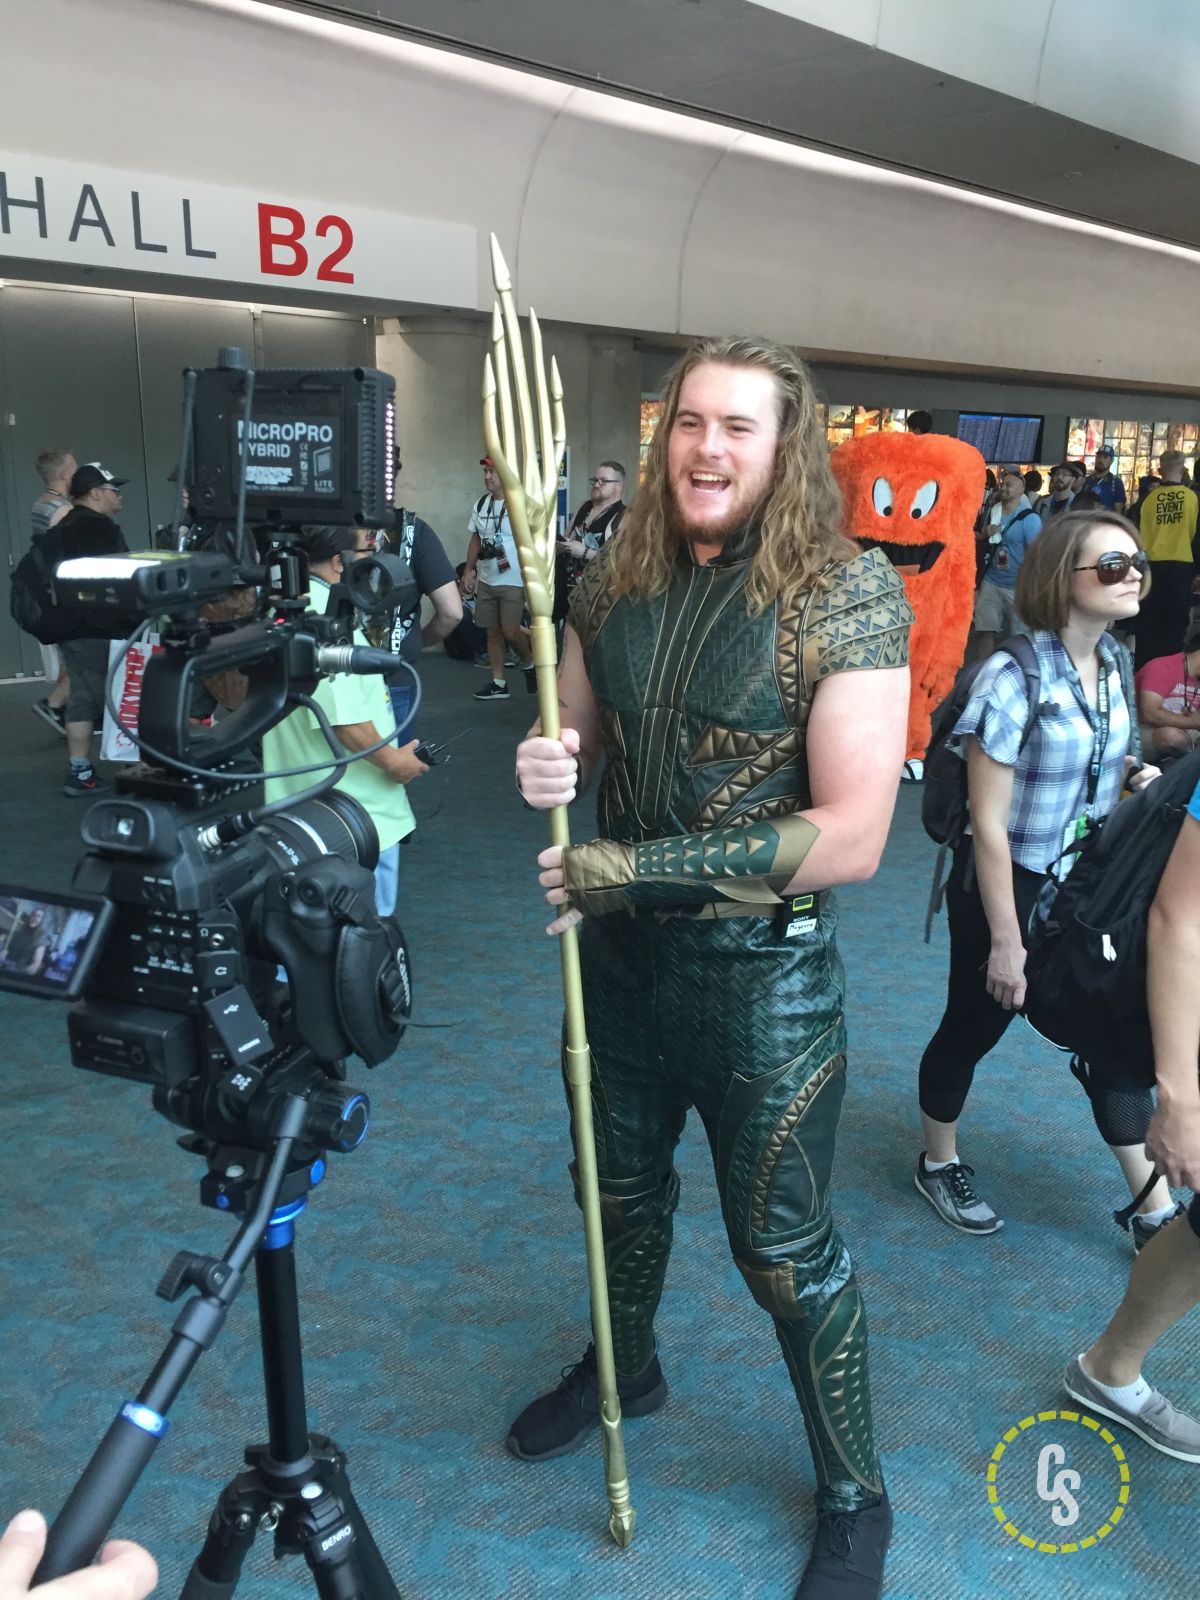 San Diego Comic-Con 2018